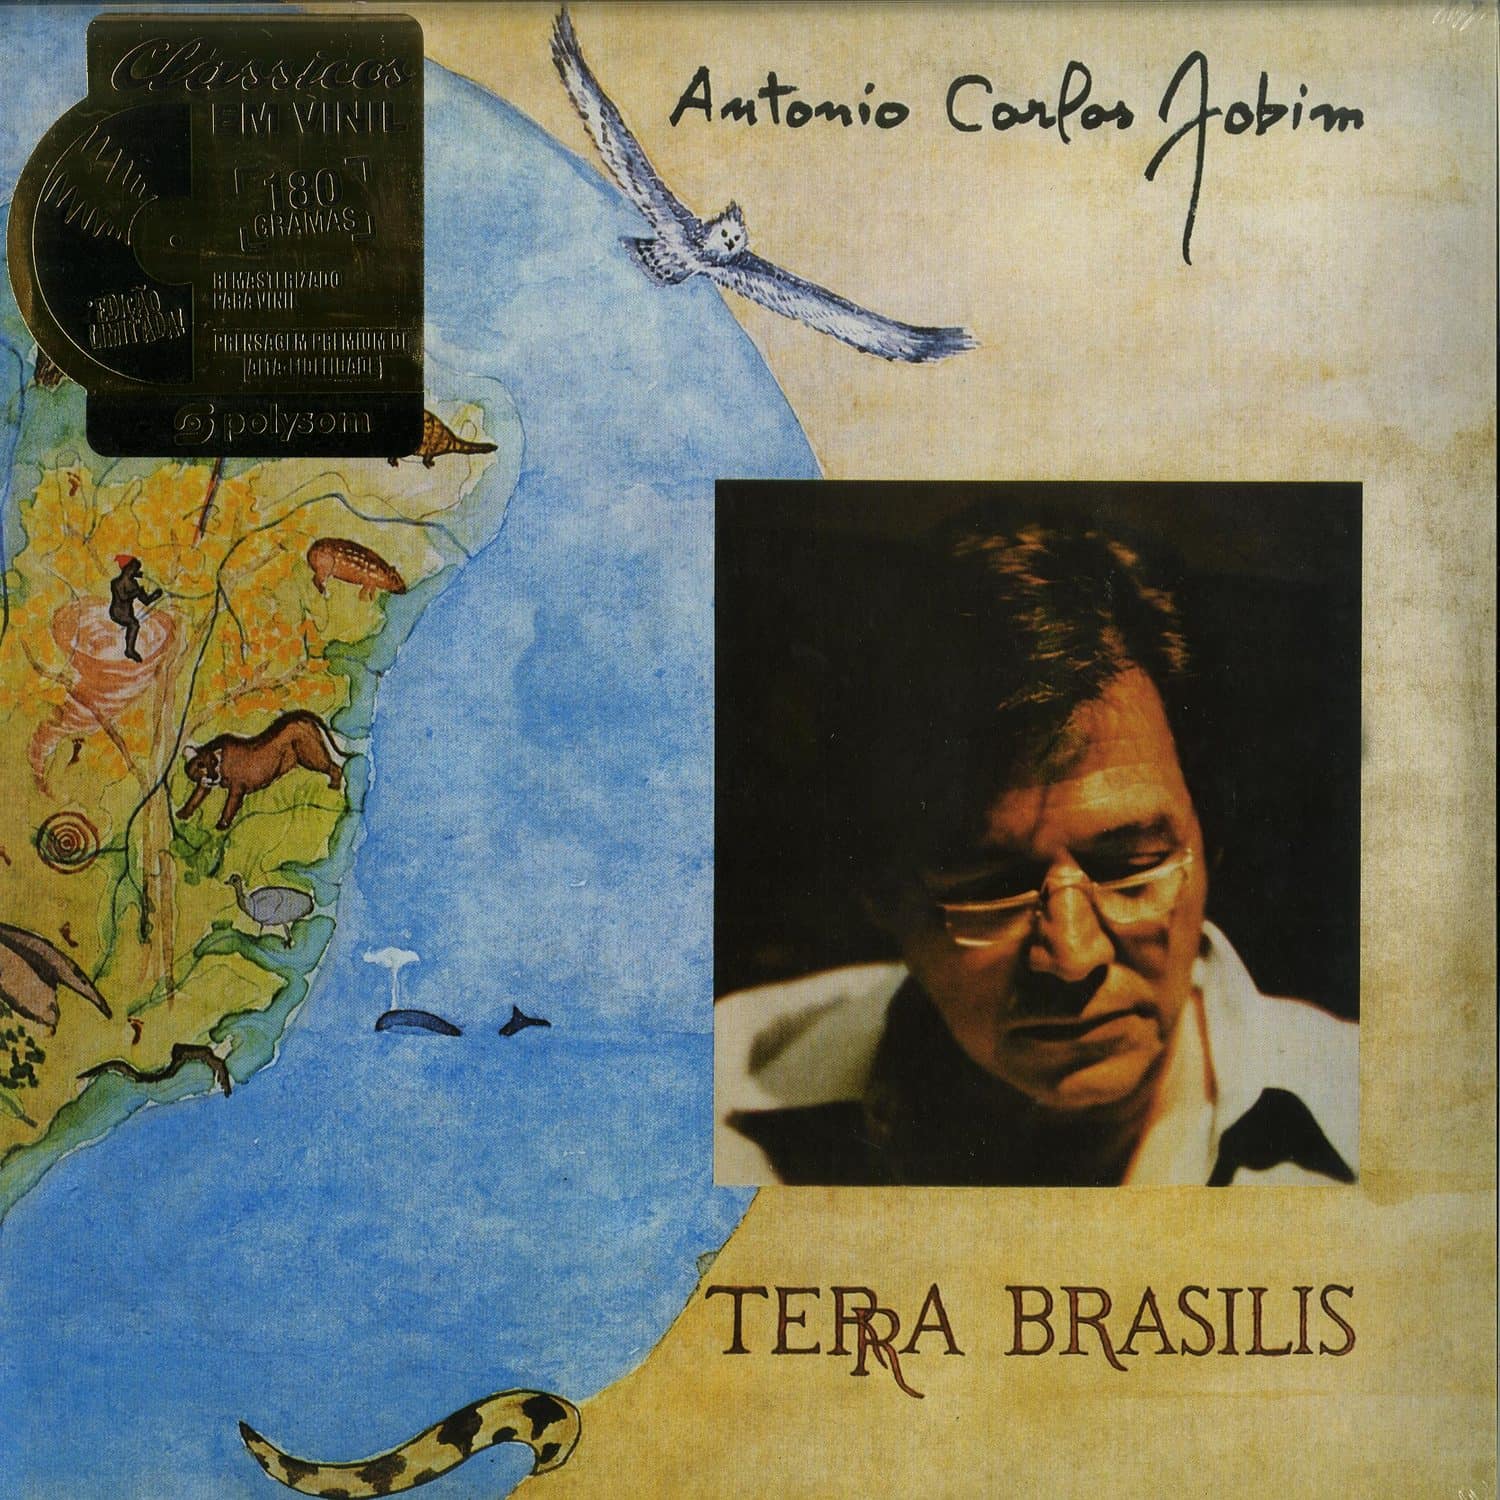 Antonio Carlos Jobim - TERRA BRASILIS 